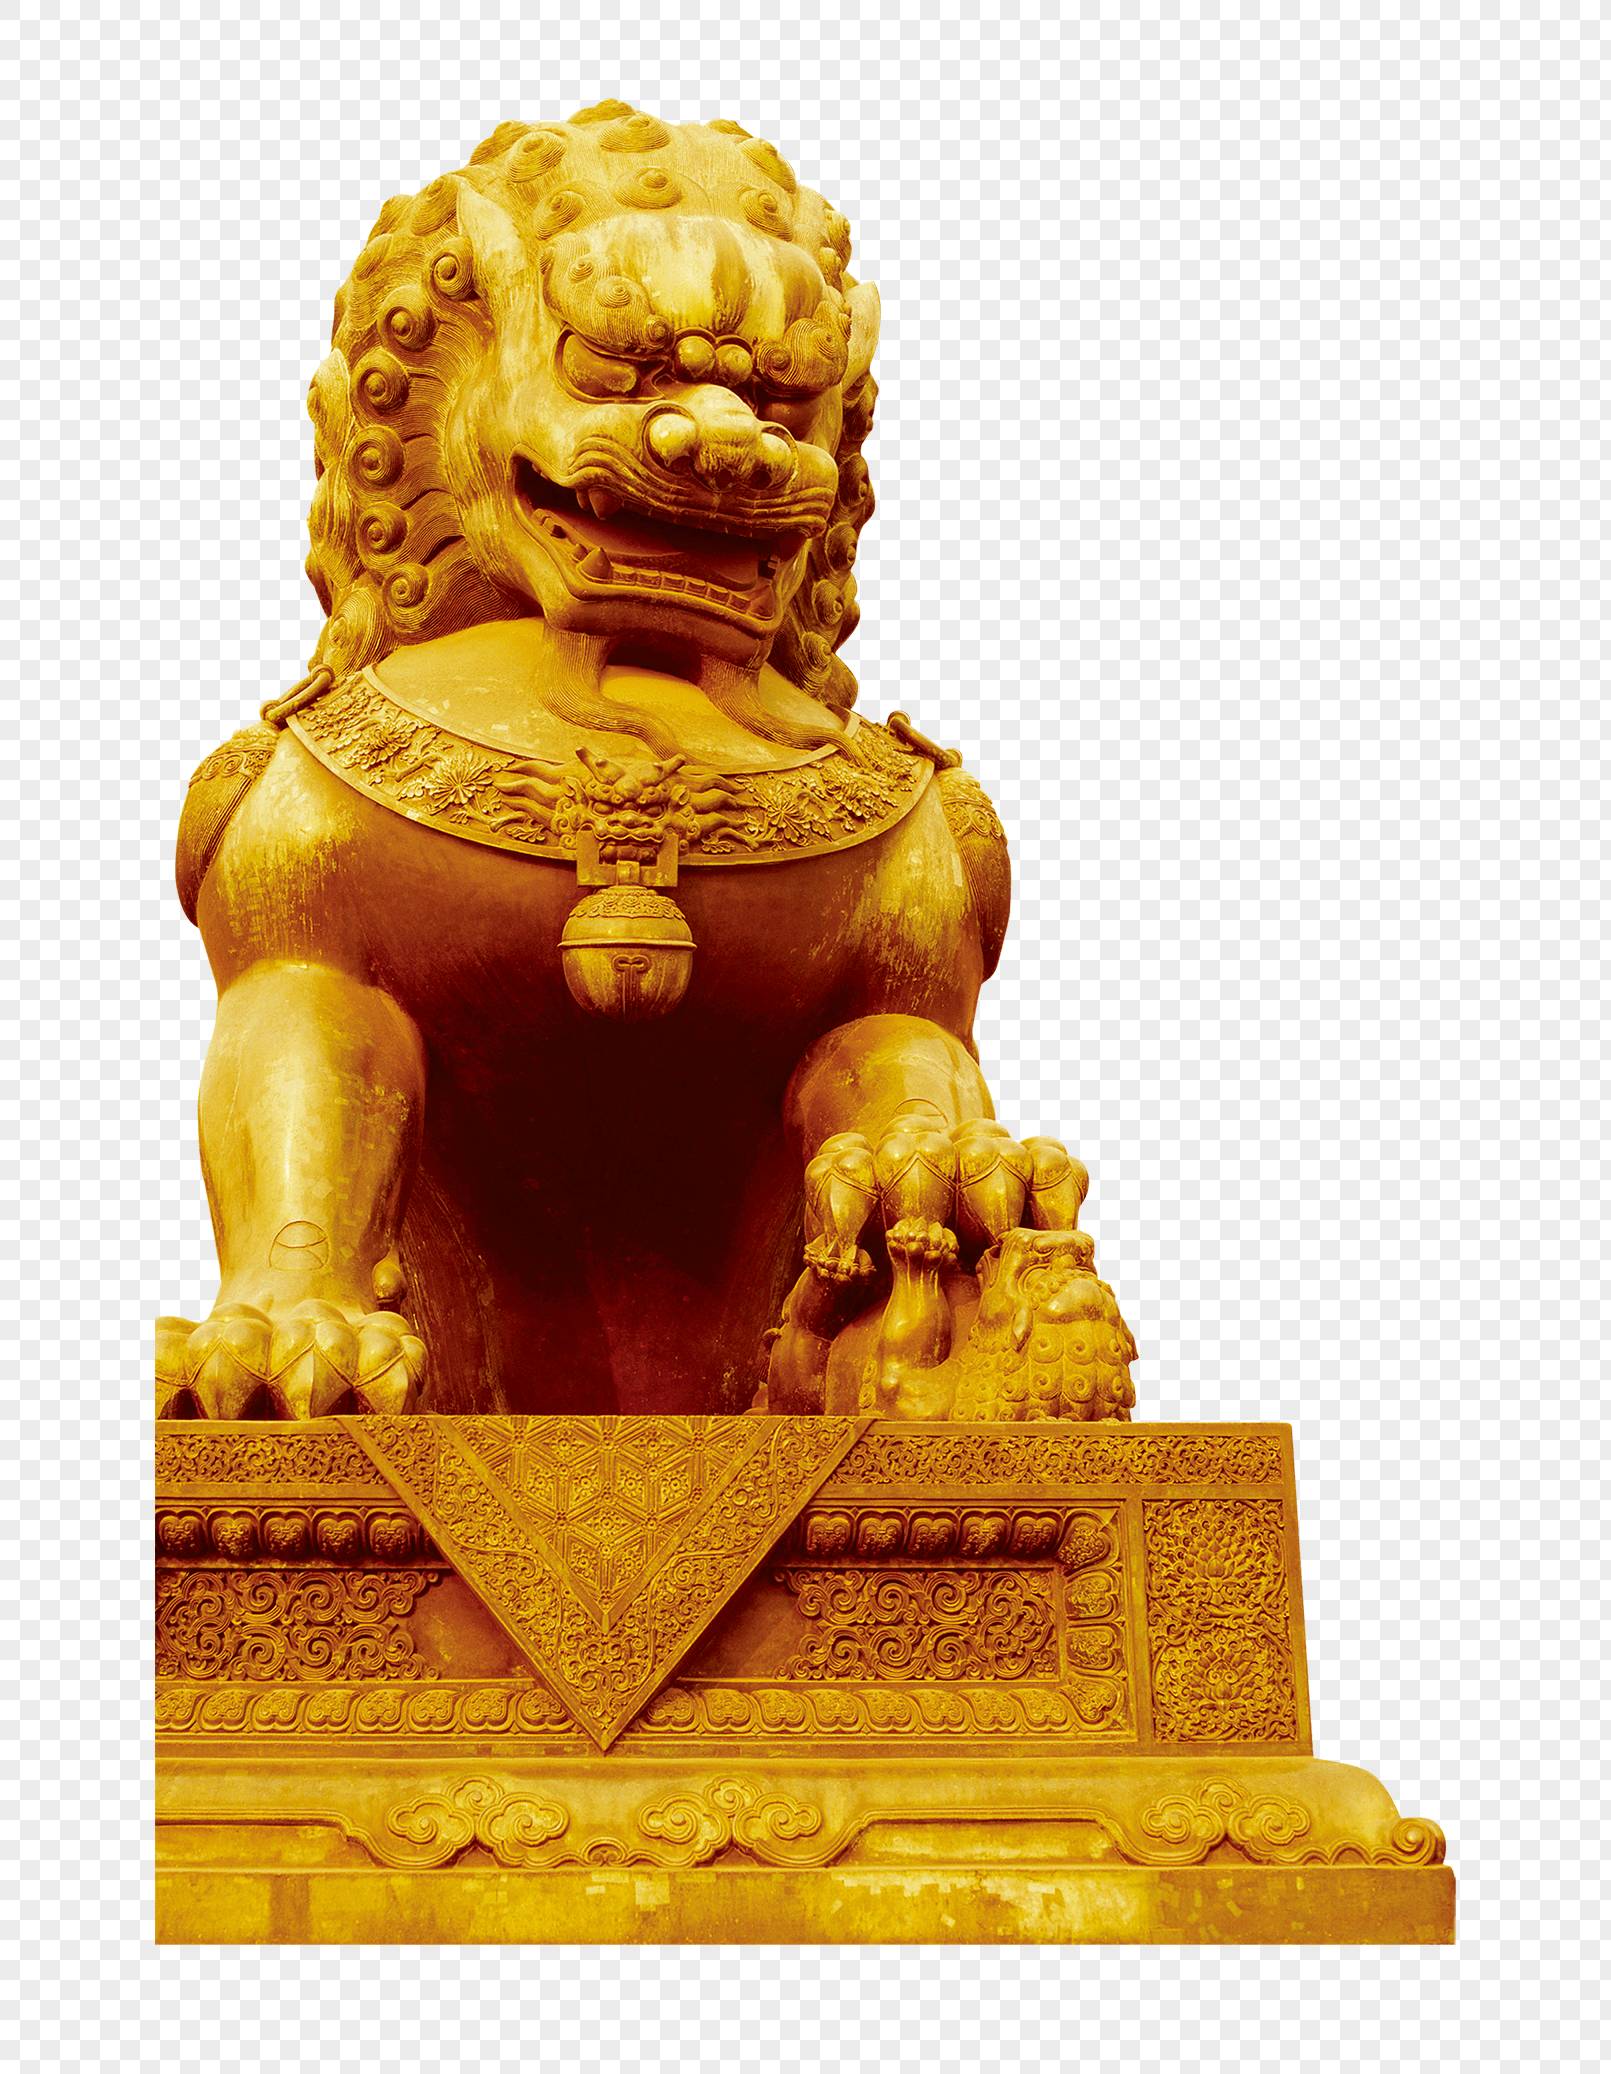 Stone Lion Logo - Golden stone lion png image_picture free download 400586696_lovepik.com